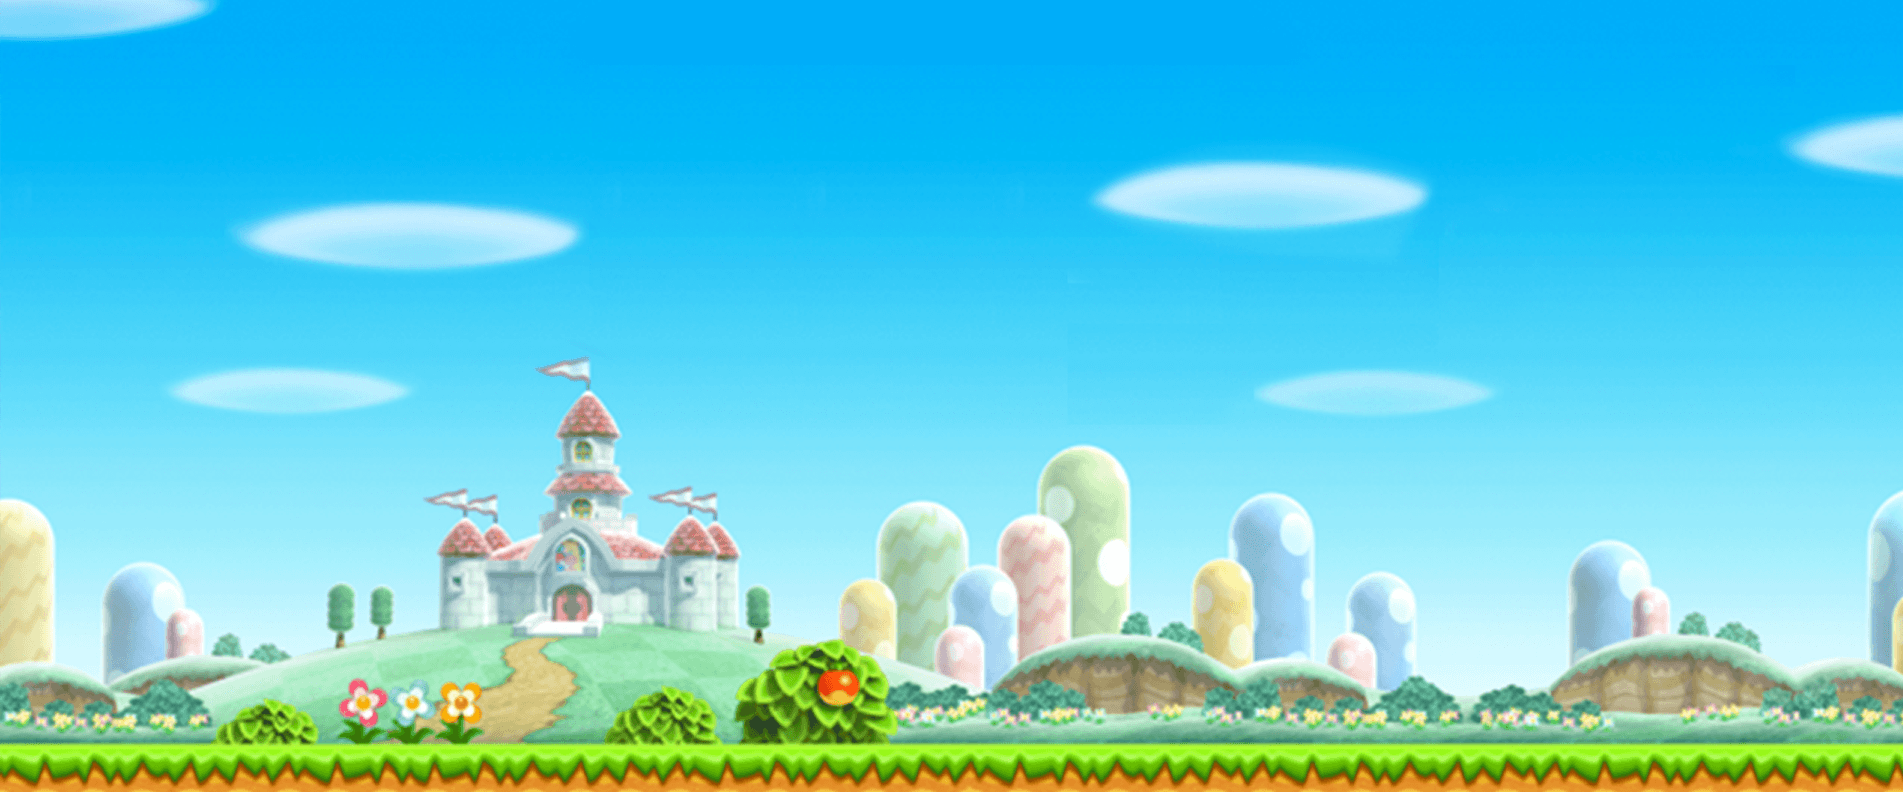 New Super Mario Bros Wii Background.